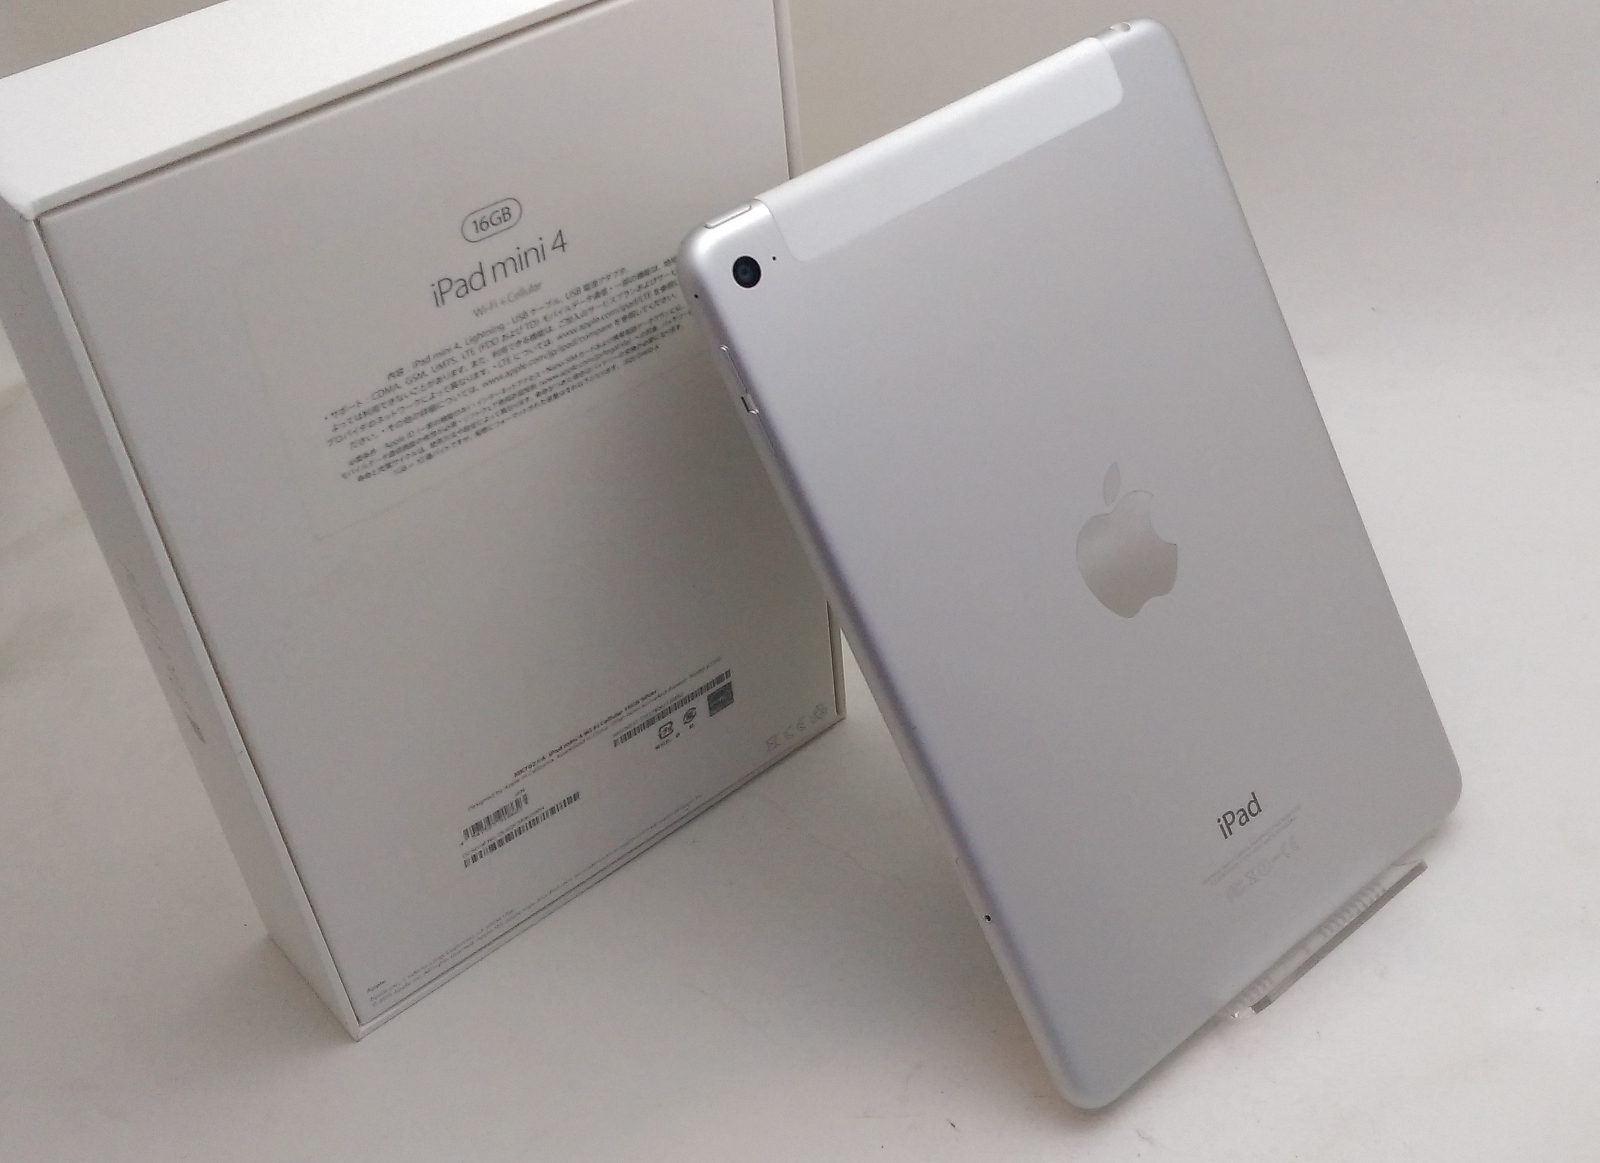 docomo iPad mini4 16GB シルバー 中古品 入荷 | スマホ、iPhone、アップル製品【高額買取】| モバックス大阪梅田店